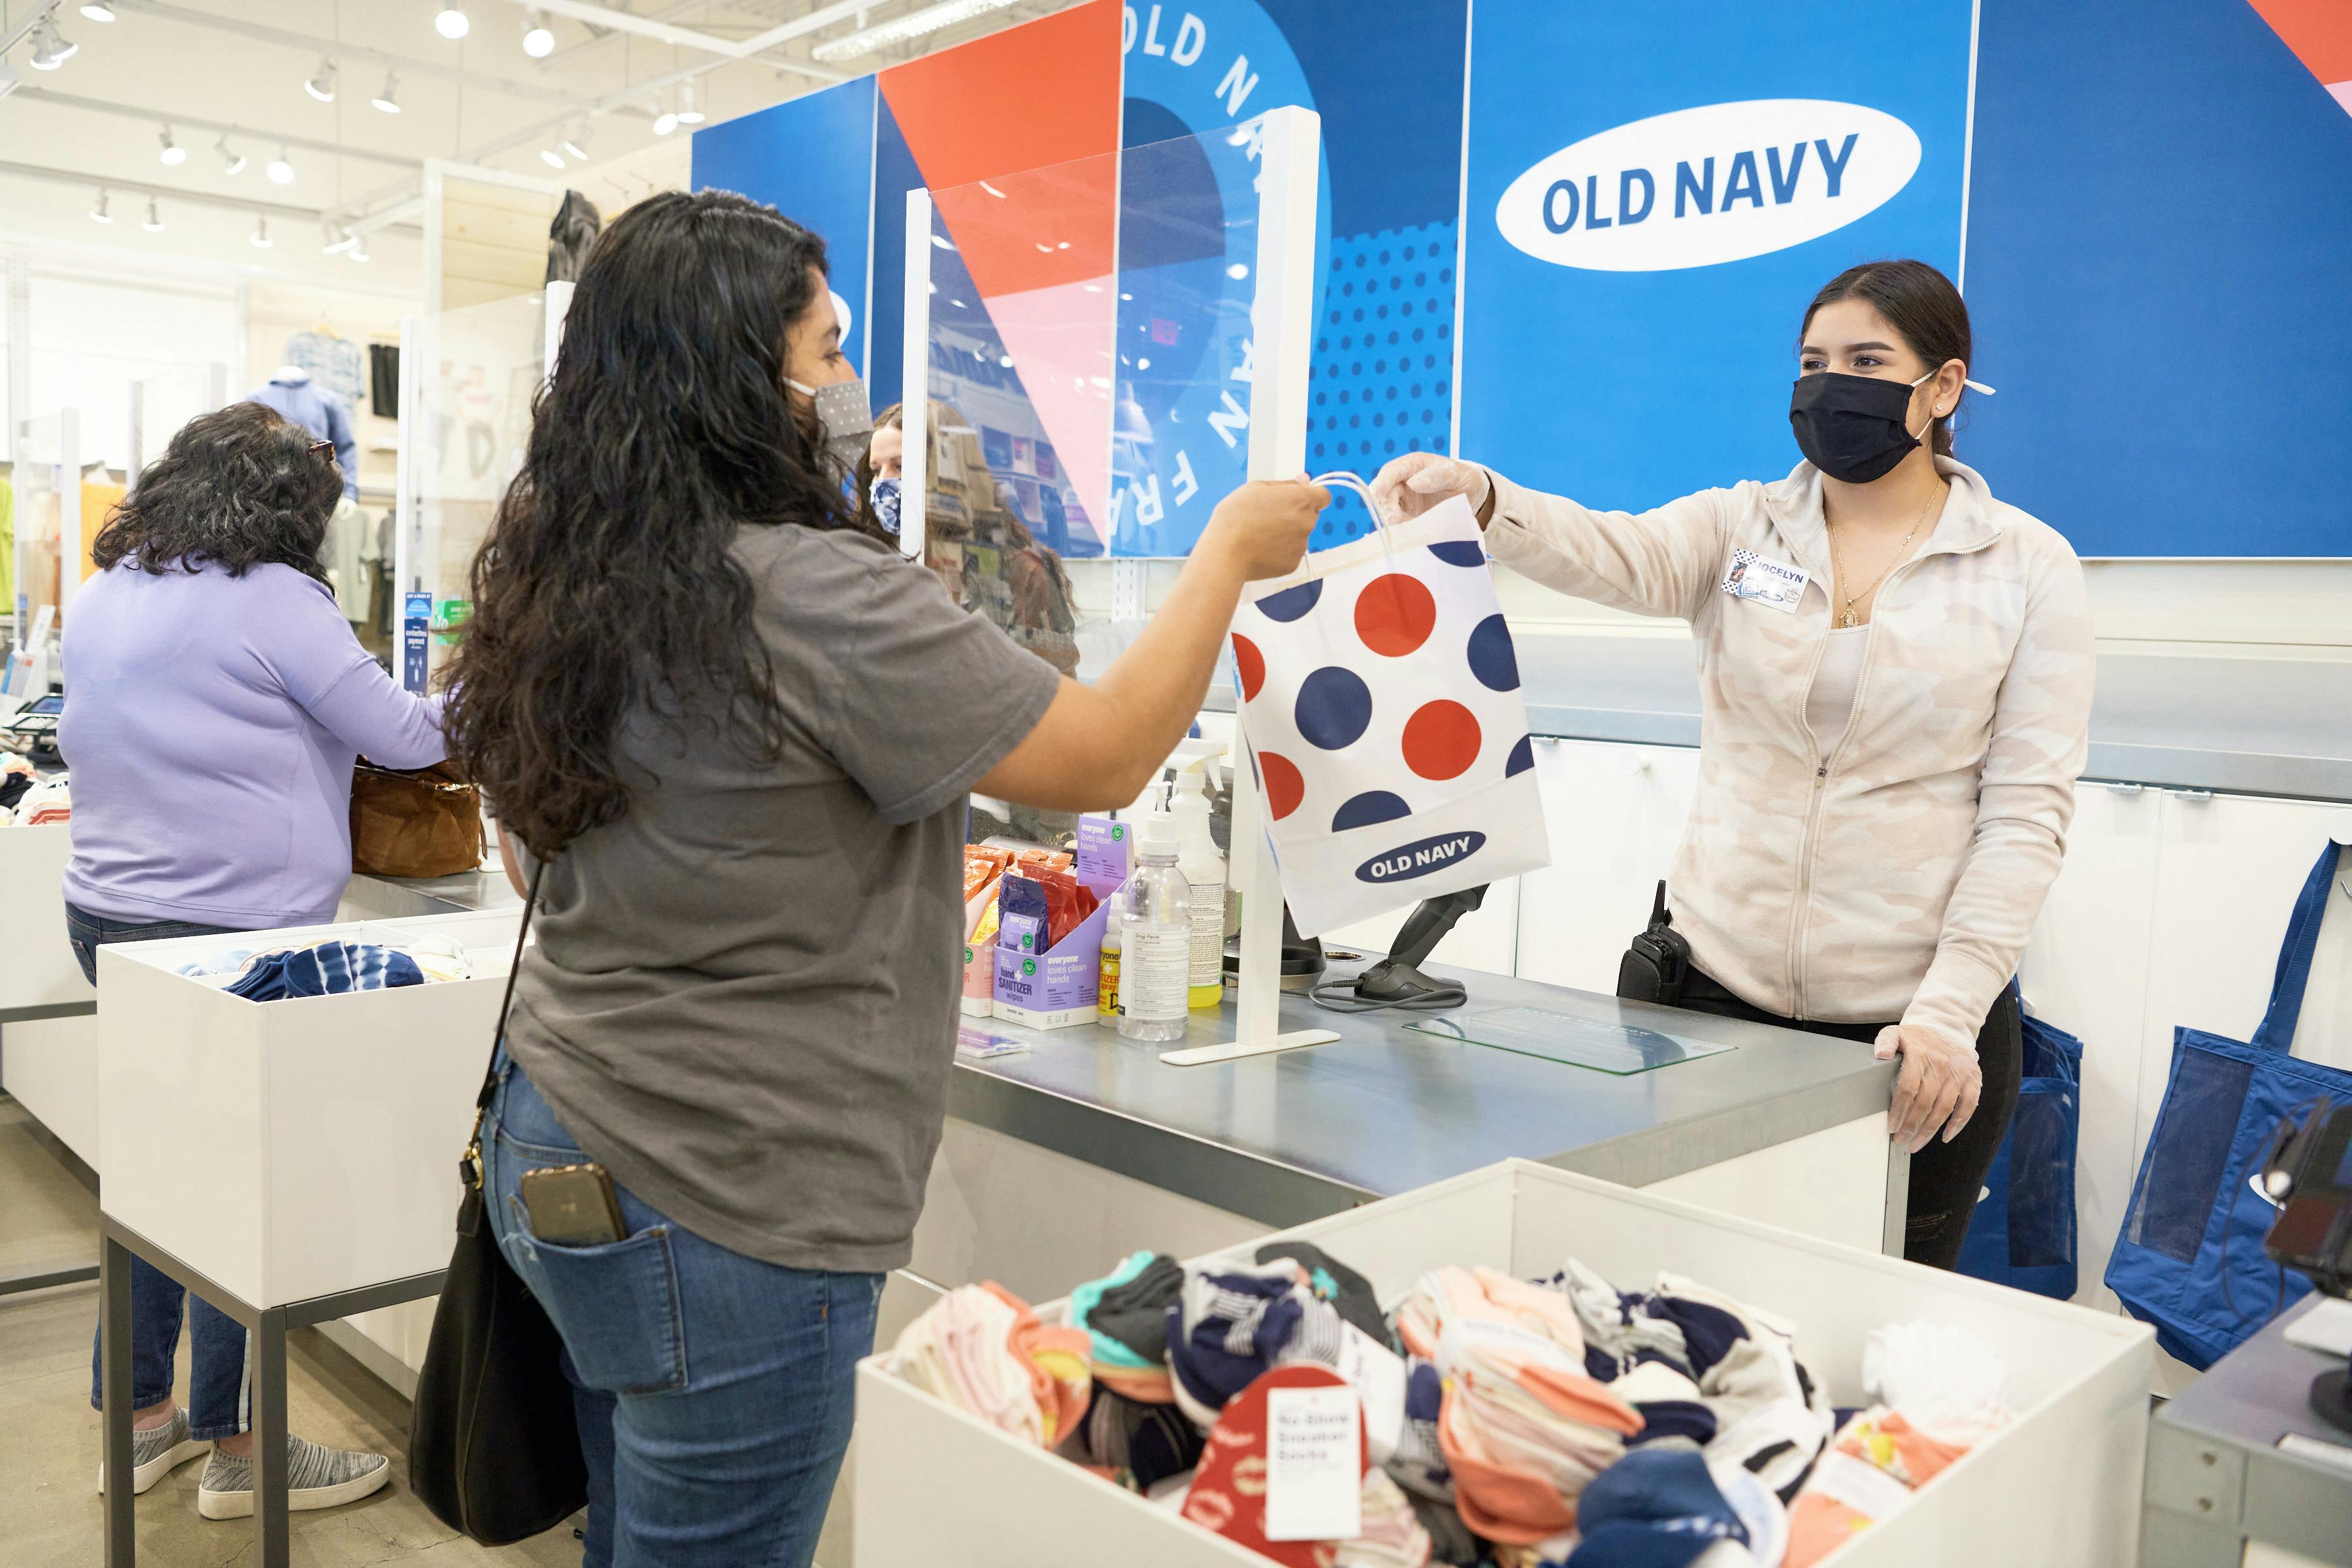 Old Navy sale has 50% off: Best deals starting under $10